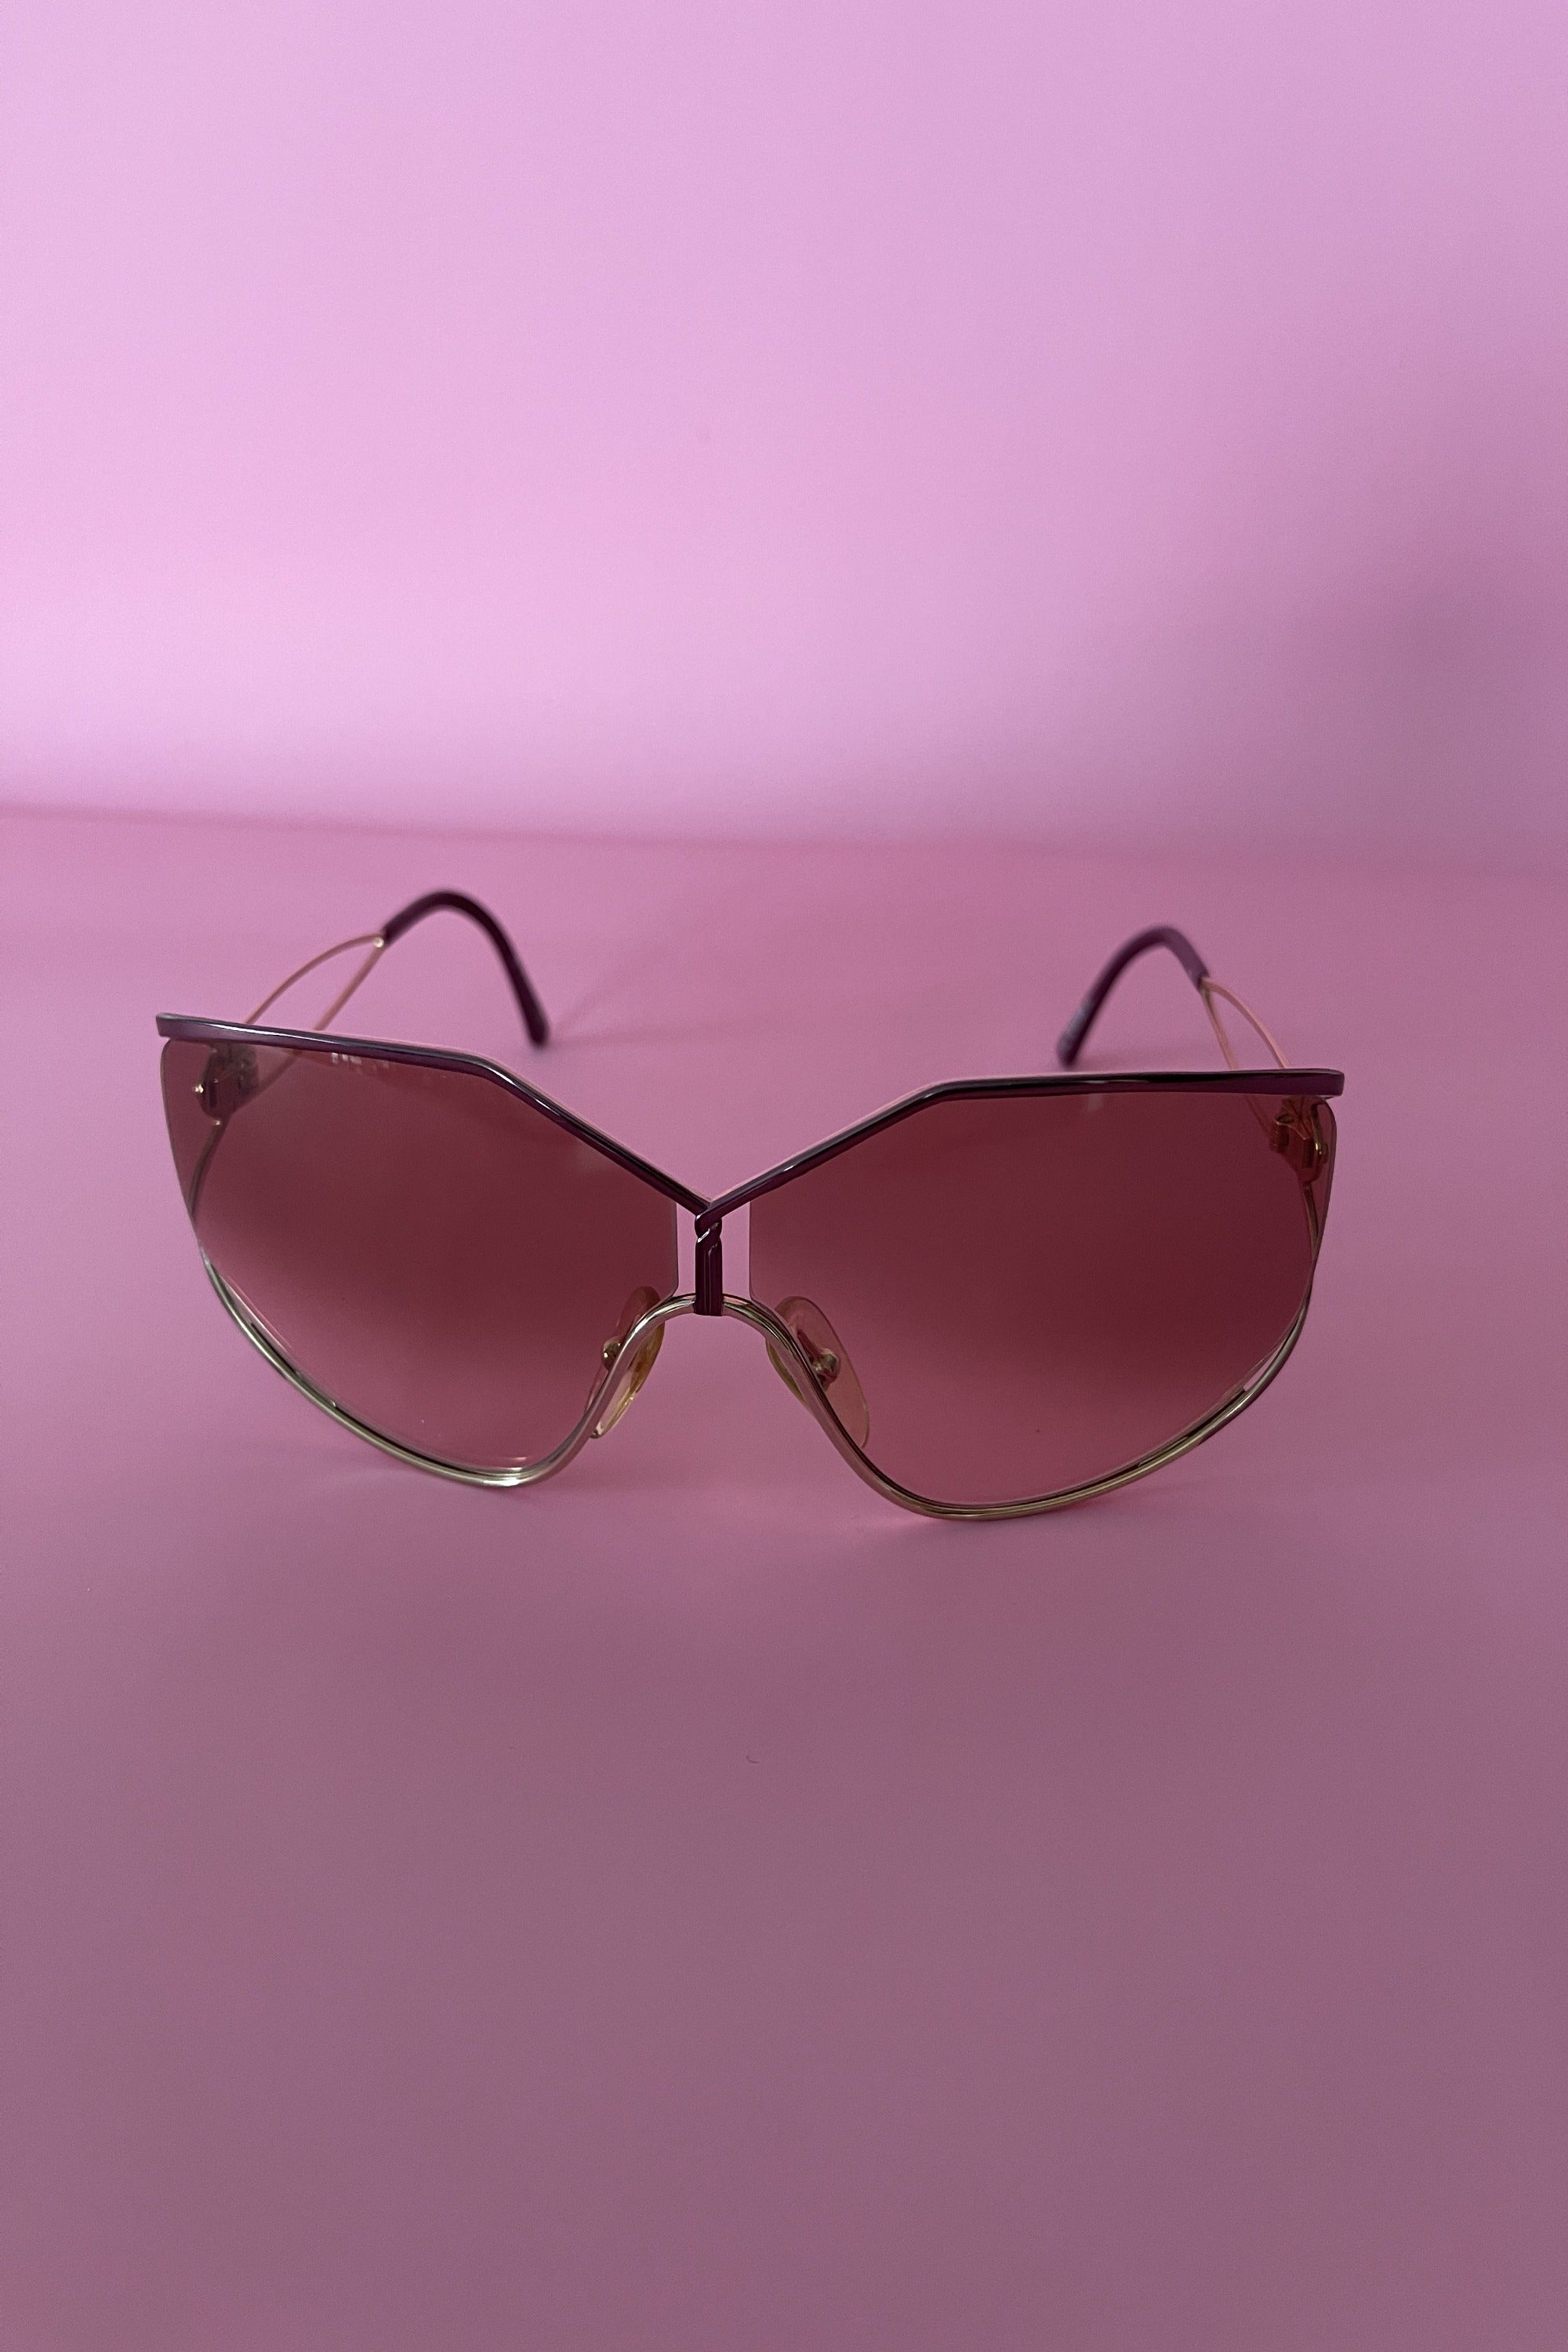 Vintage 1990s Christian Dior Sunglasses 2345-48 DEAD STOCK